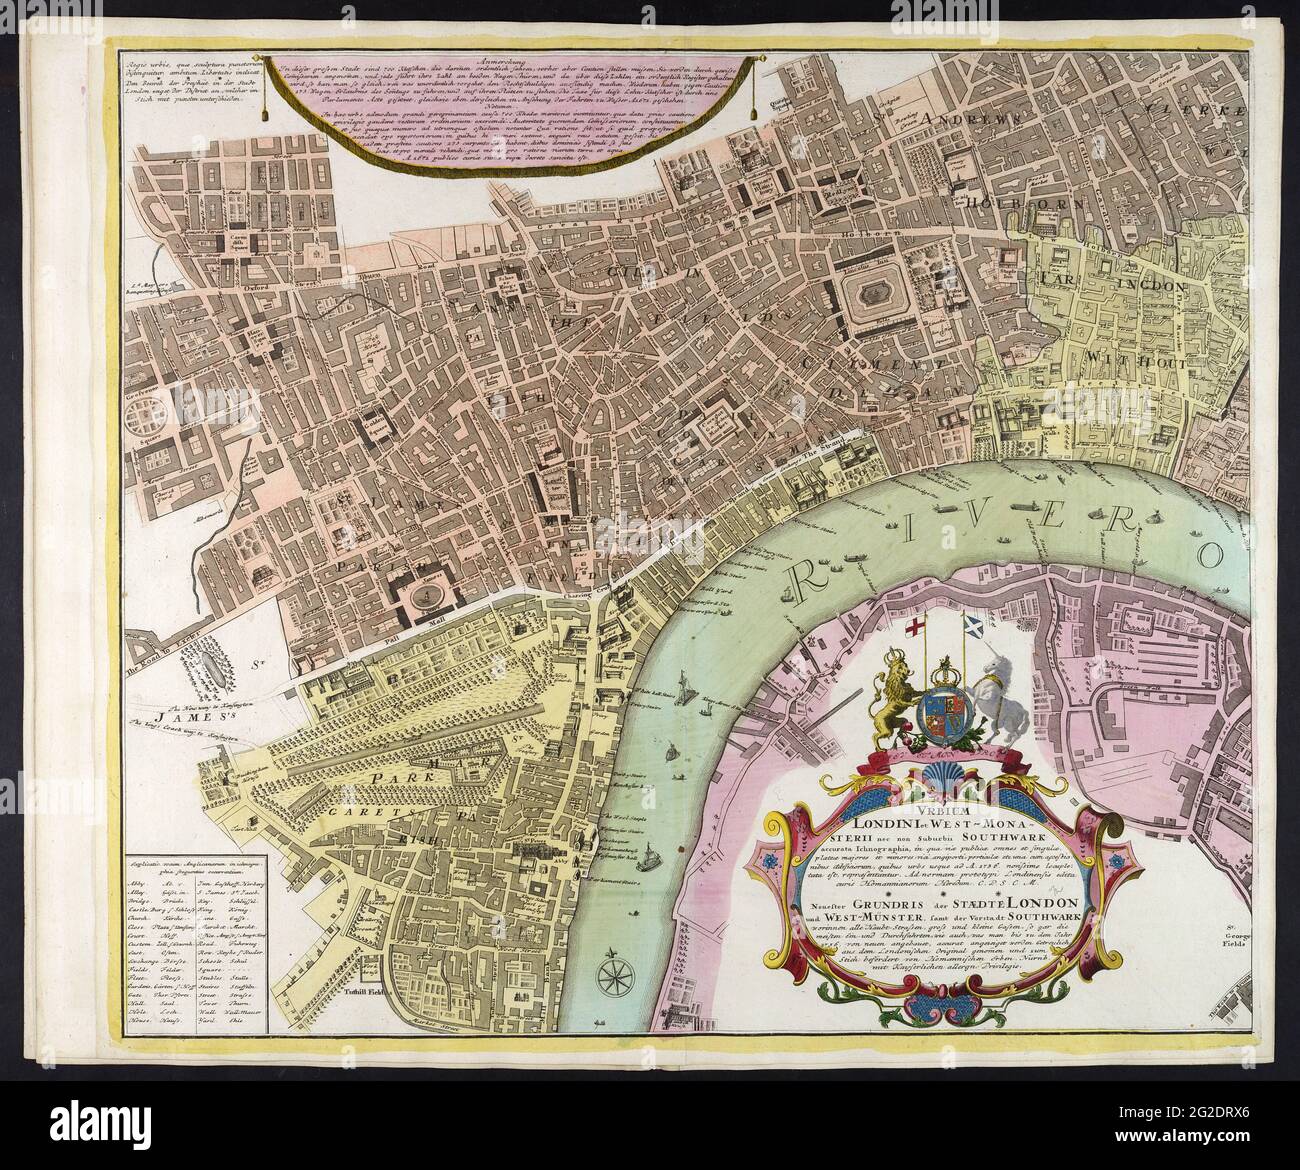 Karte von London, Karte von London, Alte Karte von London, Vintage London Karte, London Print, Retro London Karte, Alte Karten, Kartendruck London, Old United Kingdom Karte Stockfoto